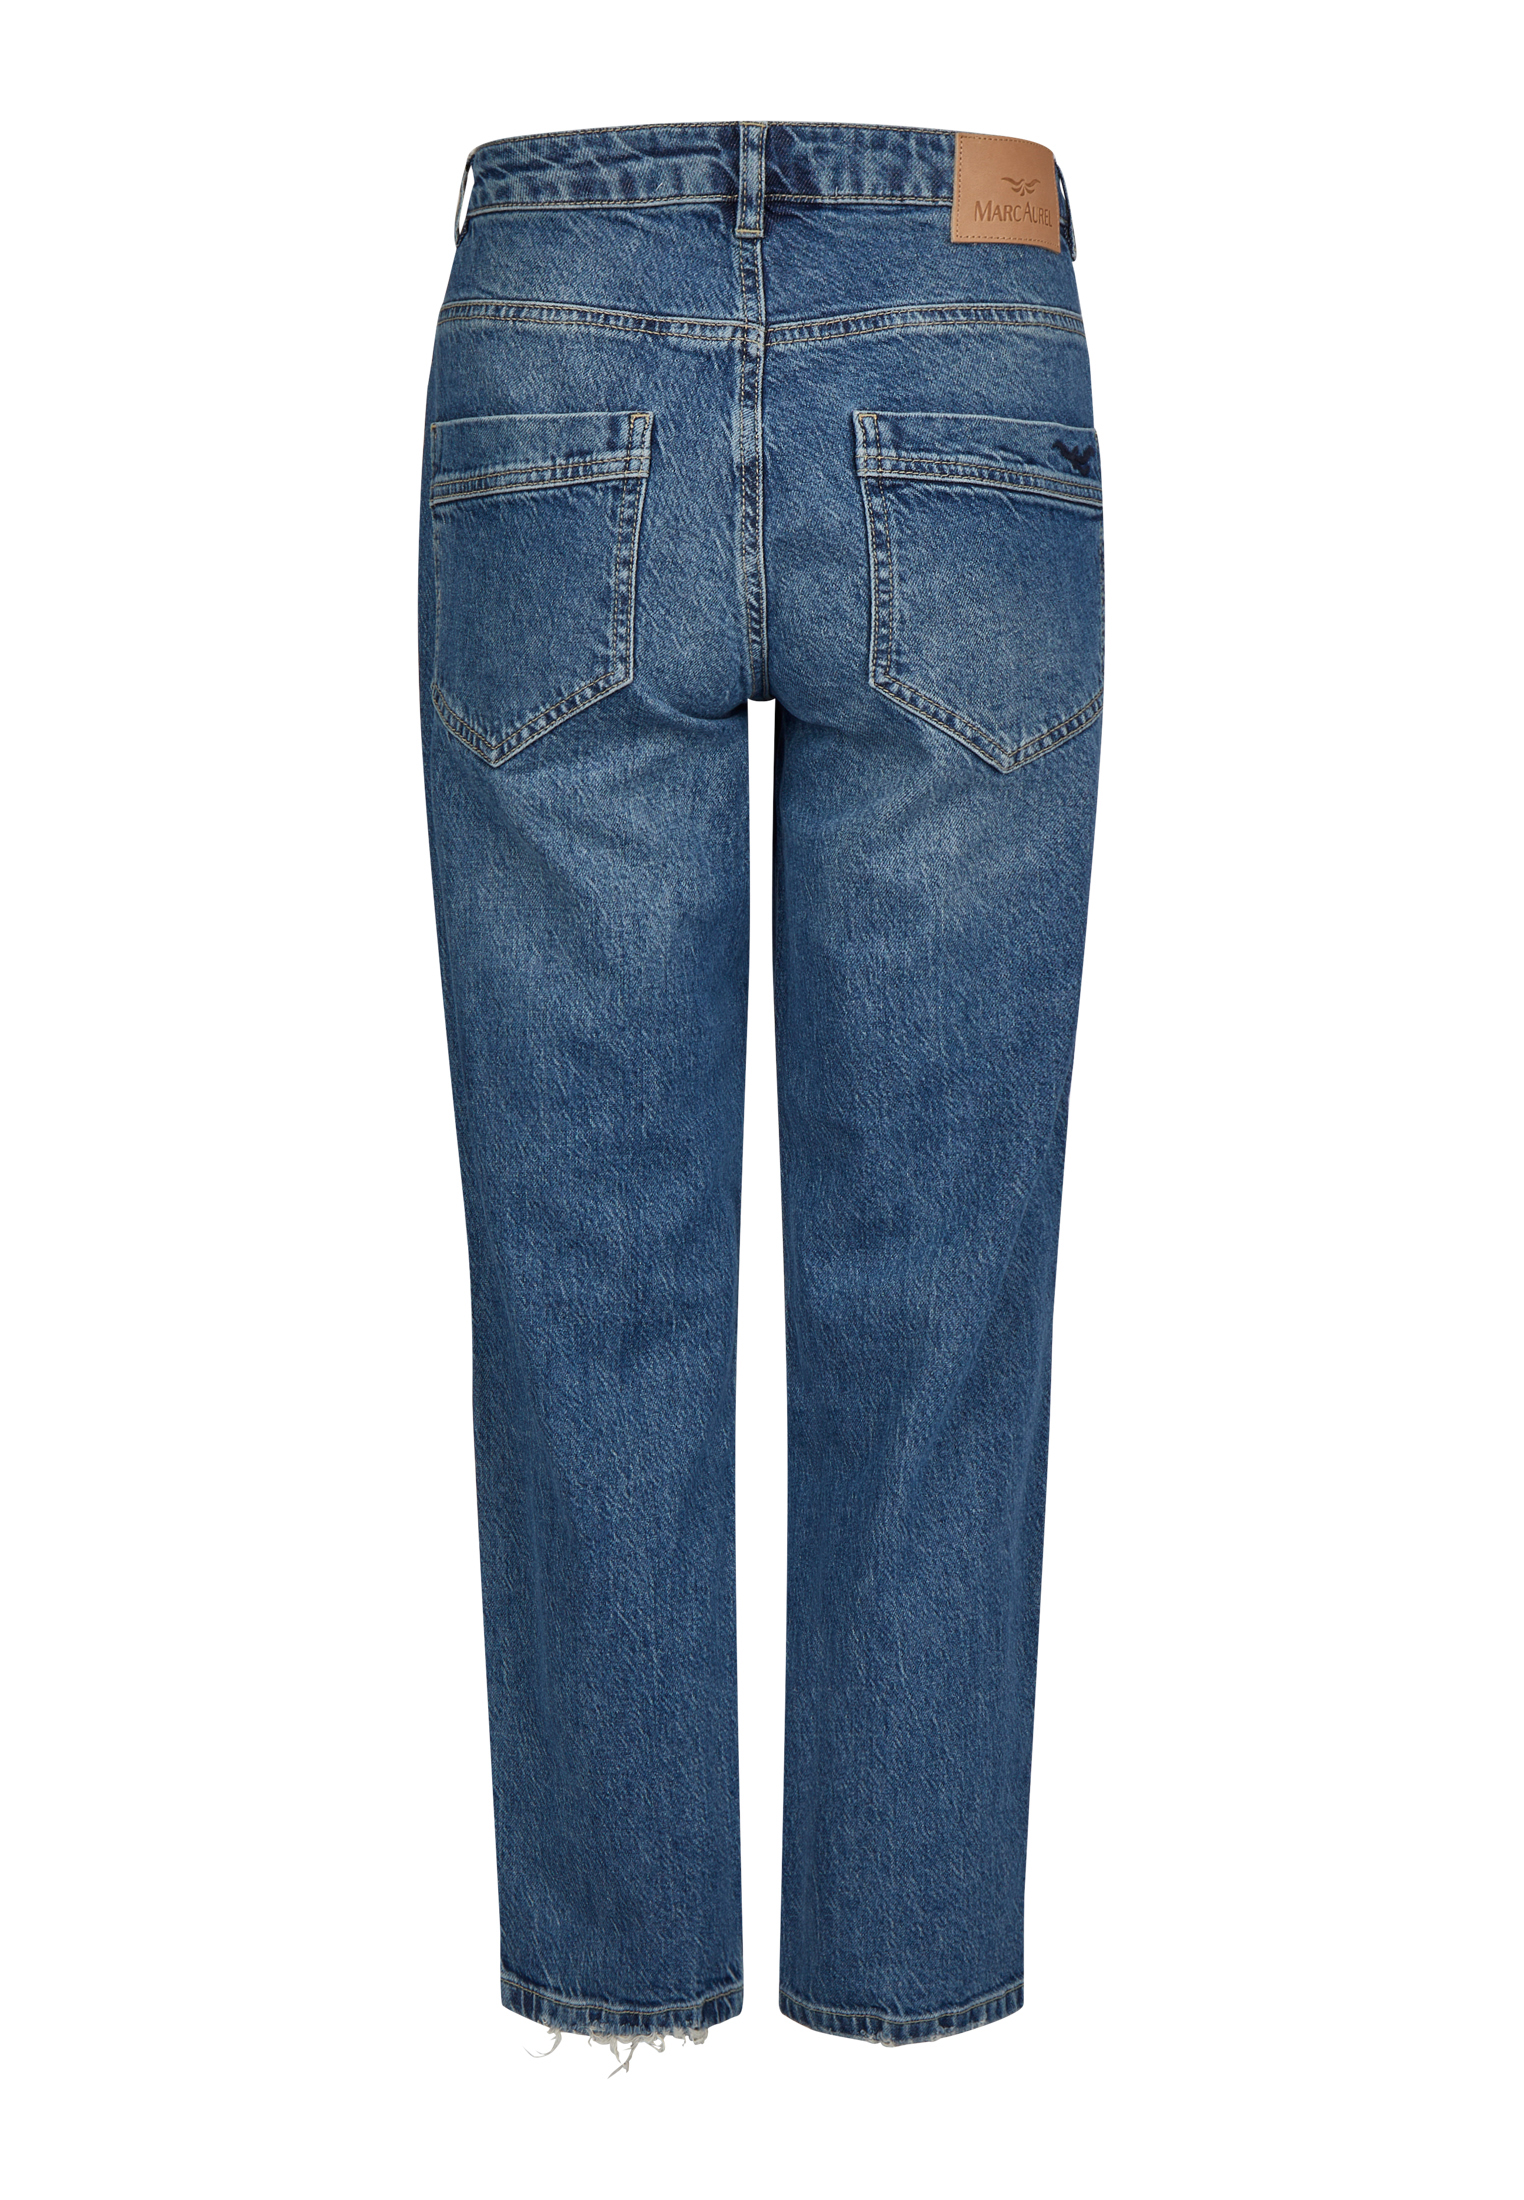 Jeans aus Comfort Blue Denim